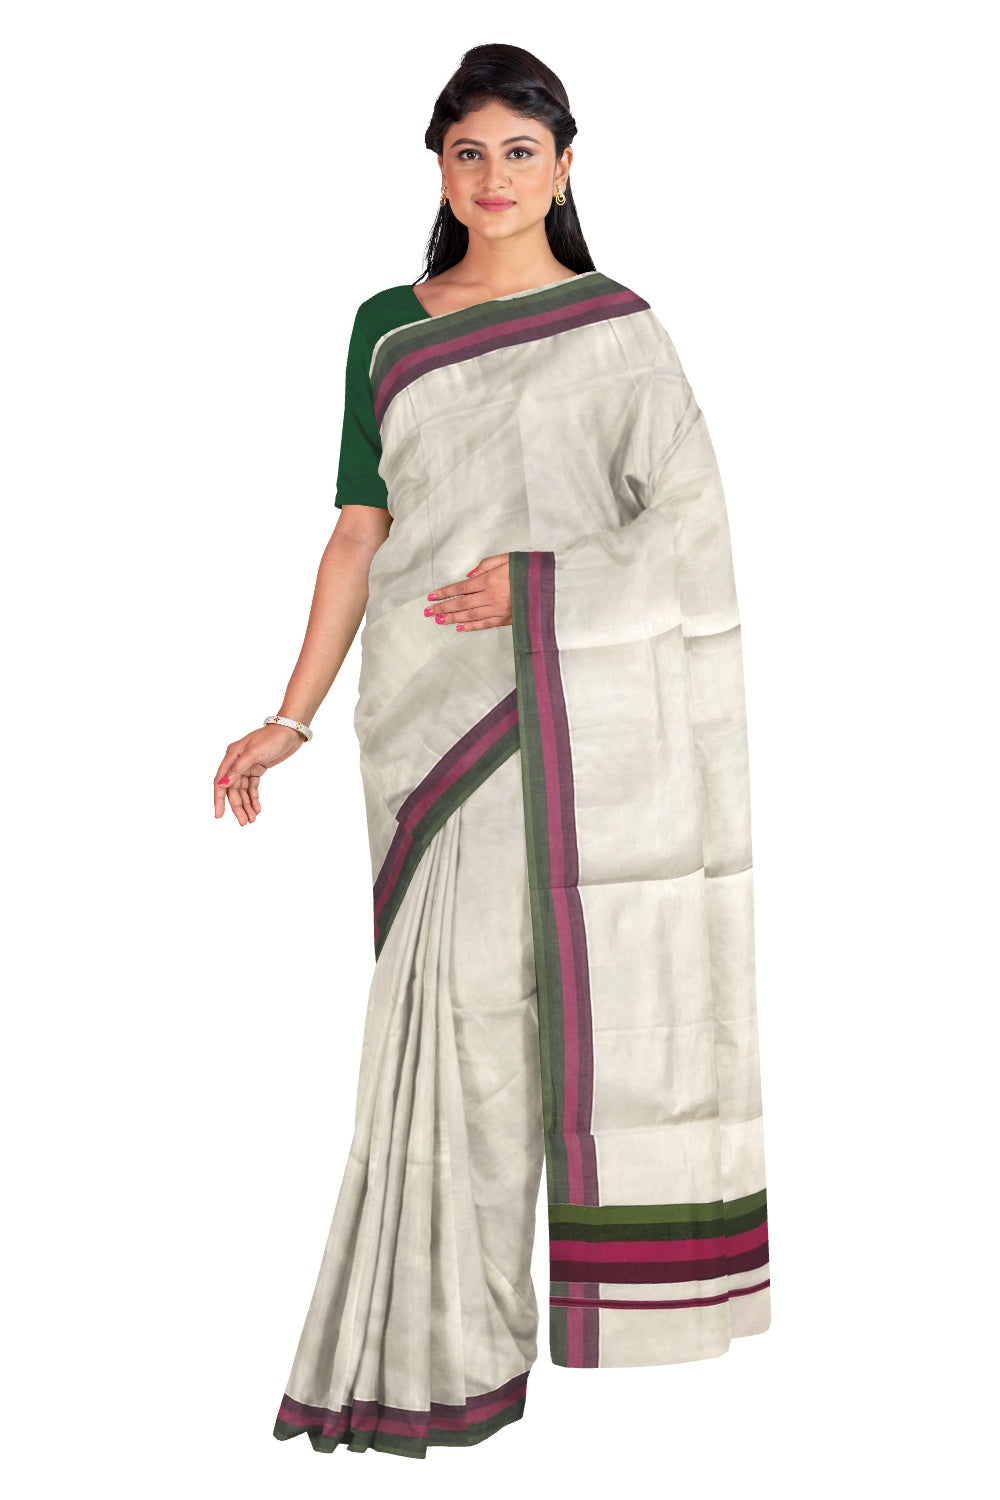 Kerala Cotton Saree with Magenta and Green Lines Border Design